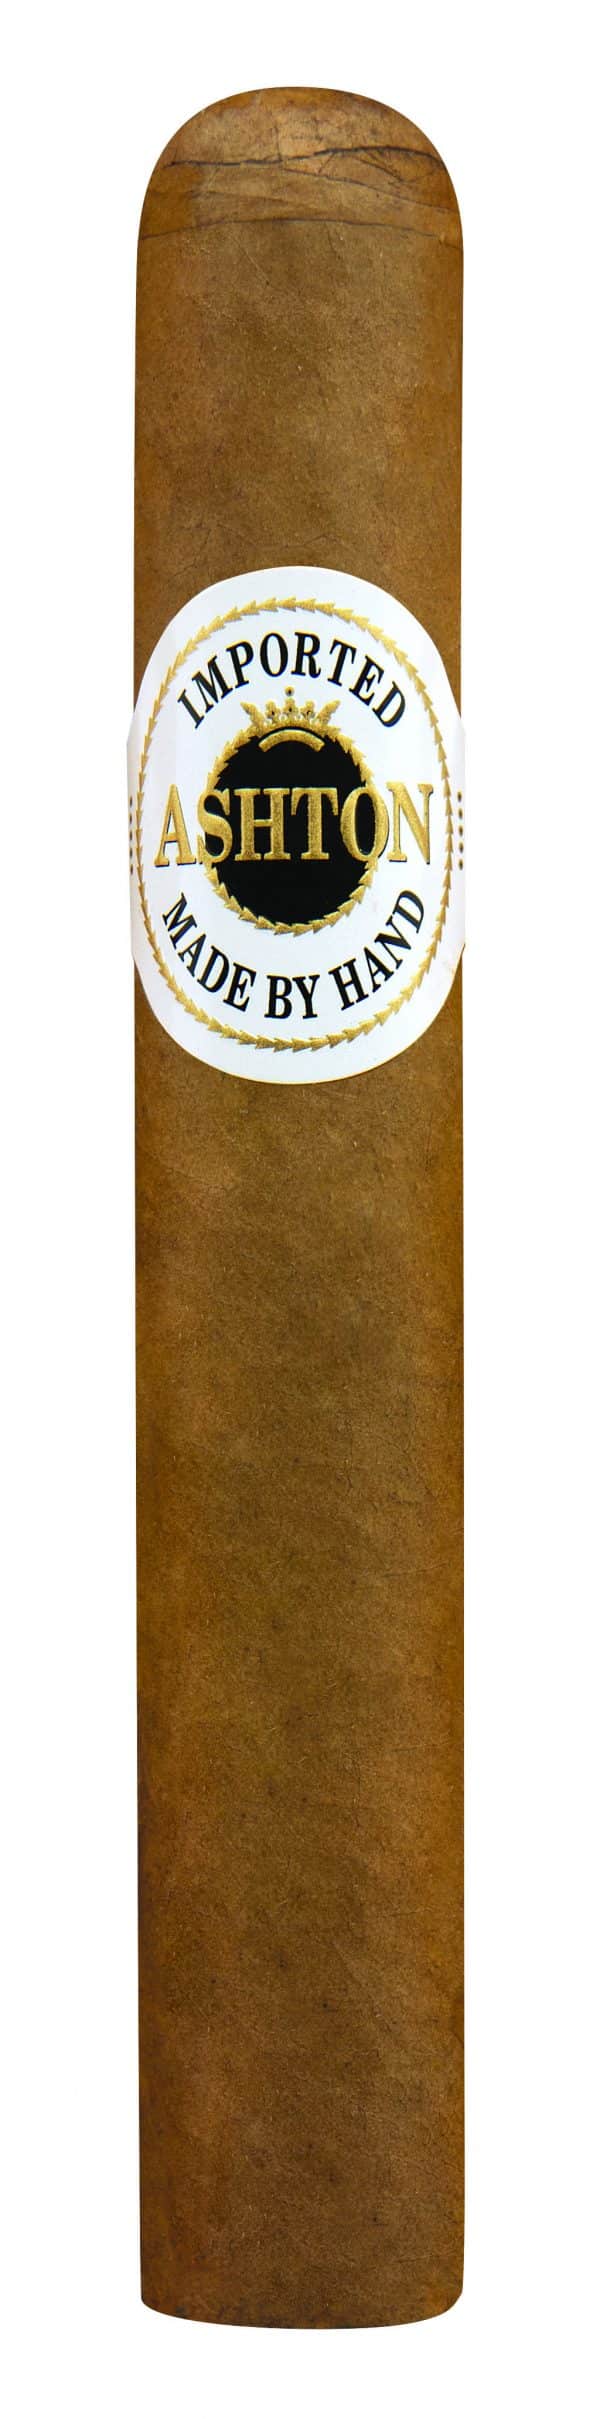 Single Ashton Magnum cigar